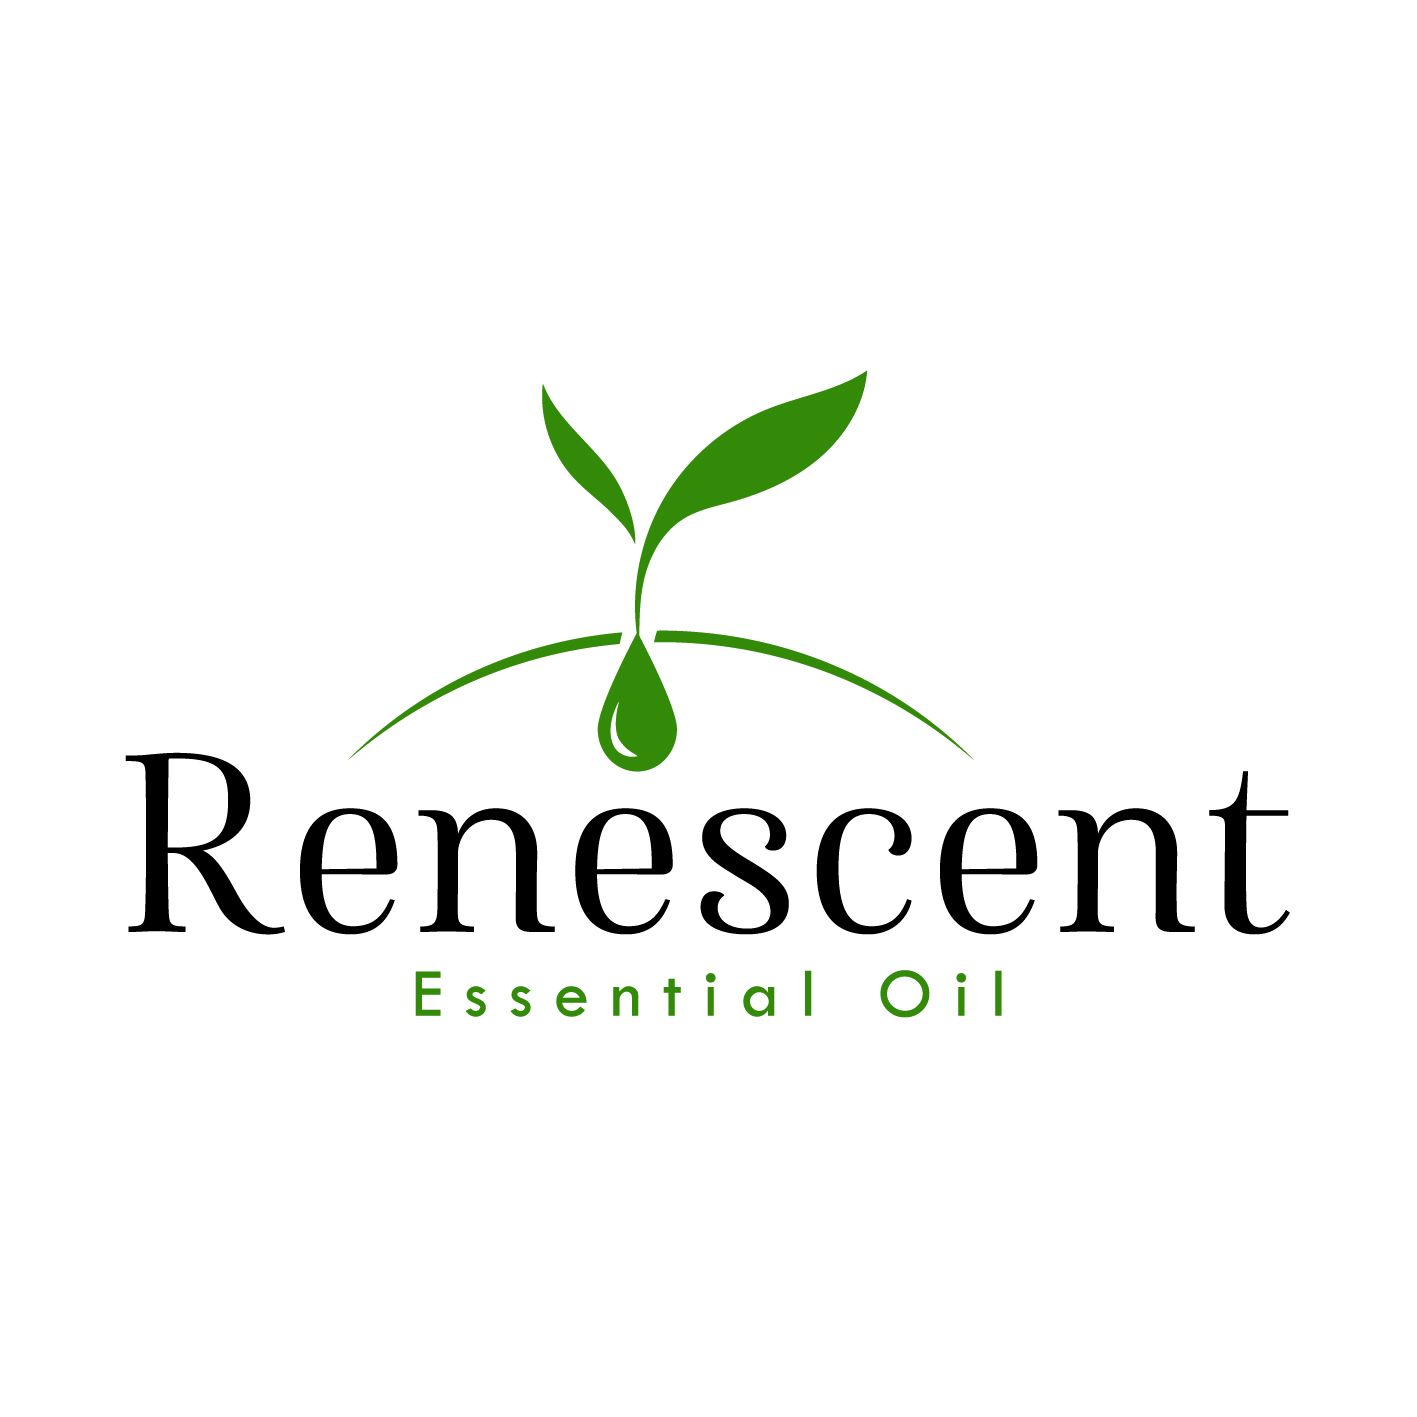 Renescent Essential